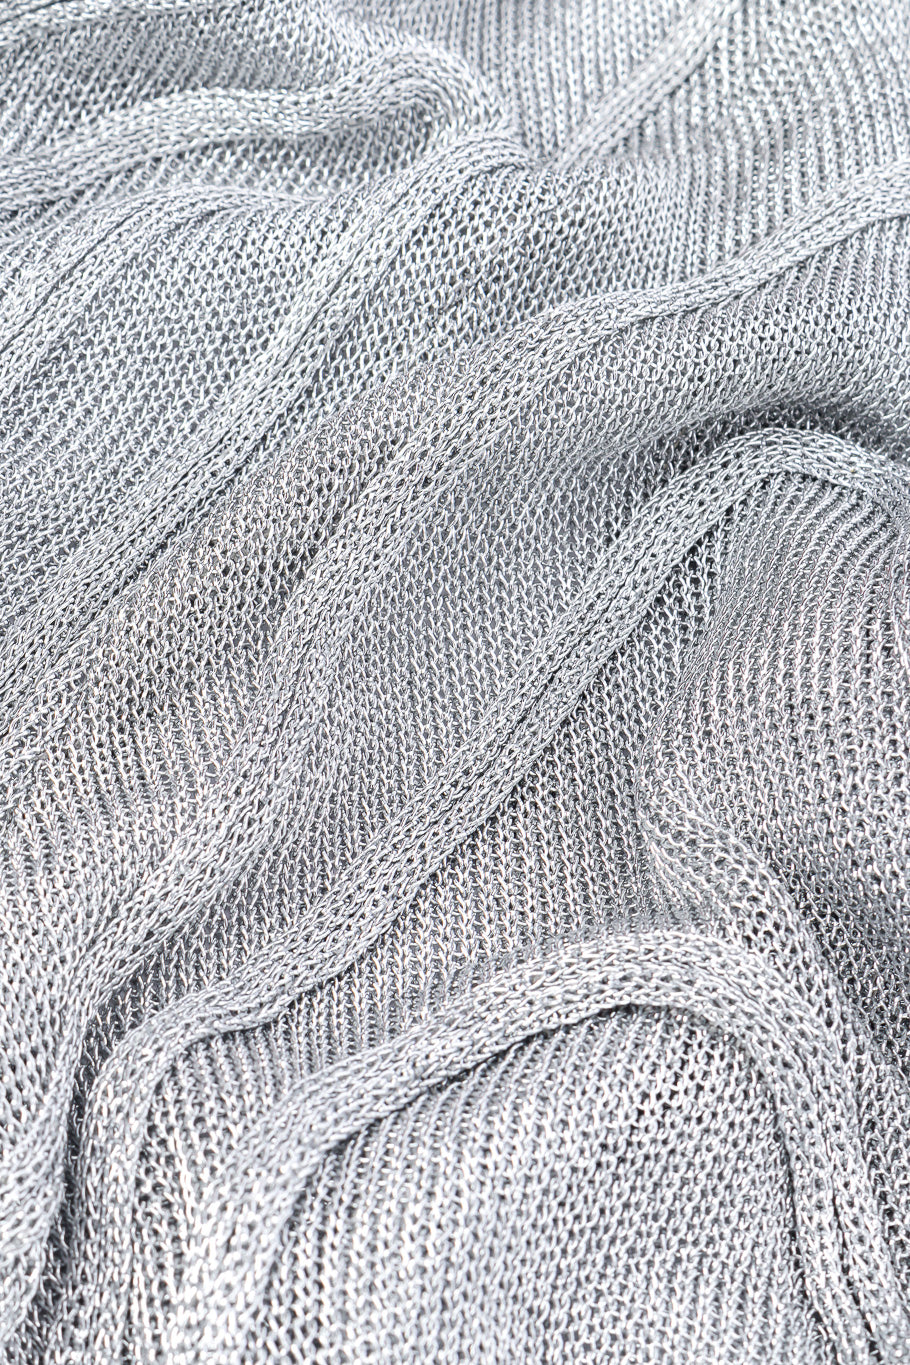 Vintage Thierry Mugler Metallic Cable Knit Cardigan fabric closeup @Recessla